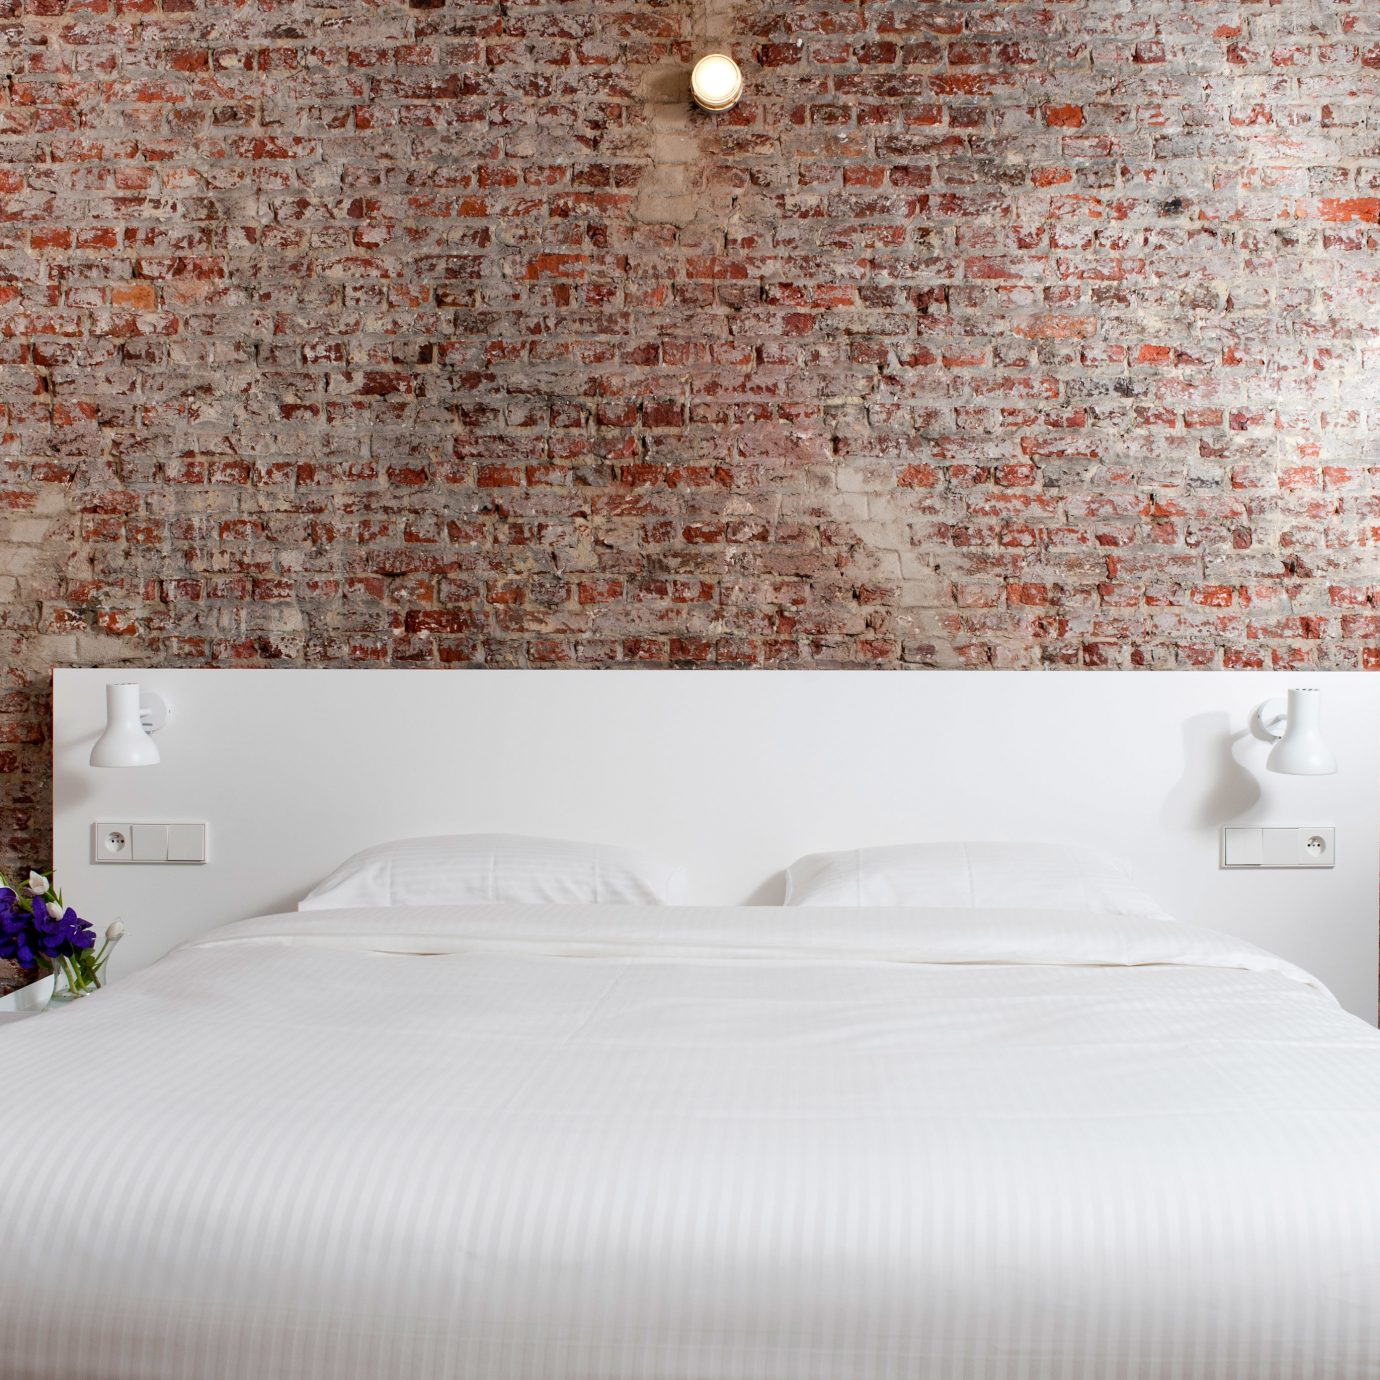 Bedroom City Hip Modern white bed sheet textile wallpaper cottage